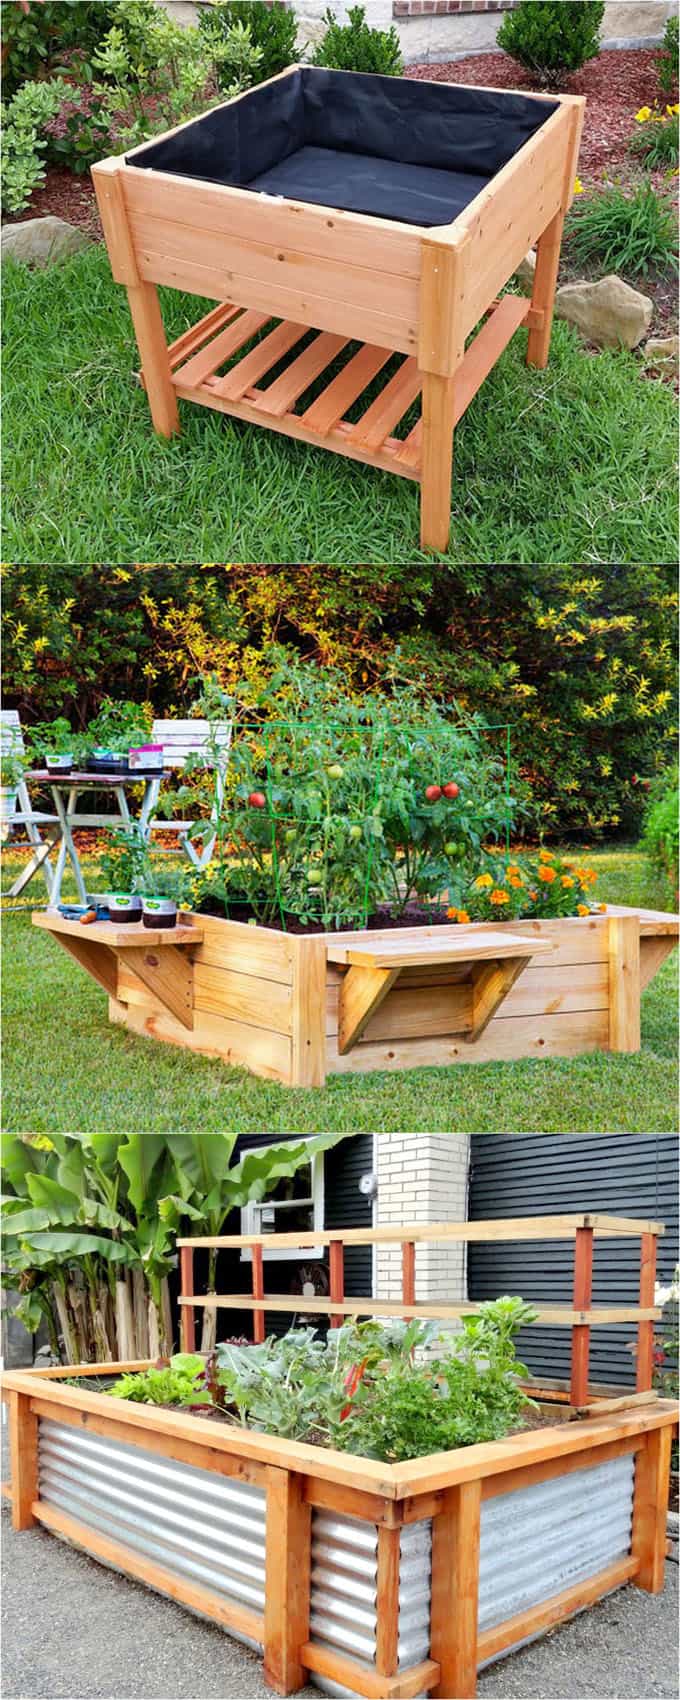 DIY Raised Garden Boxes